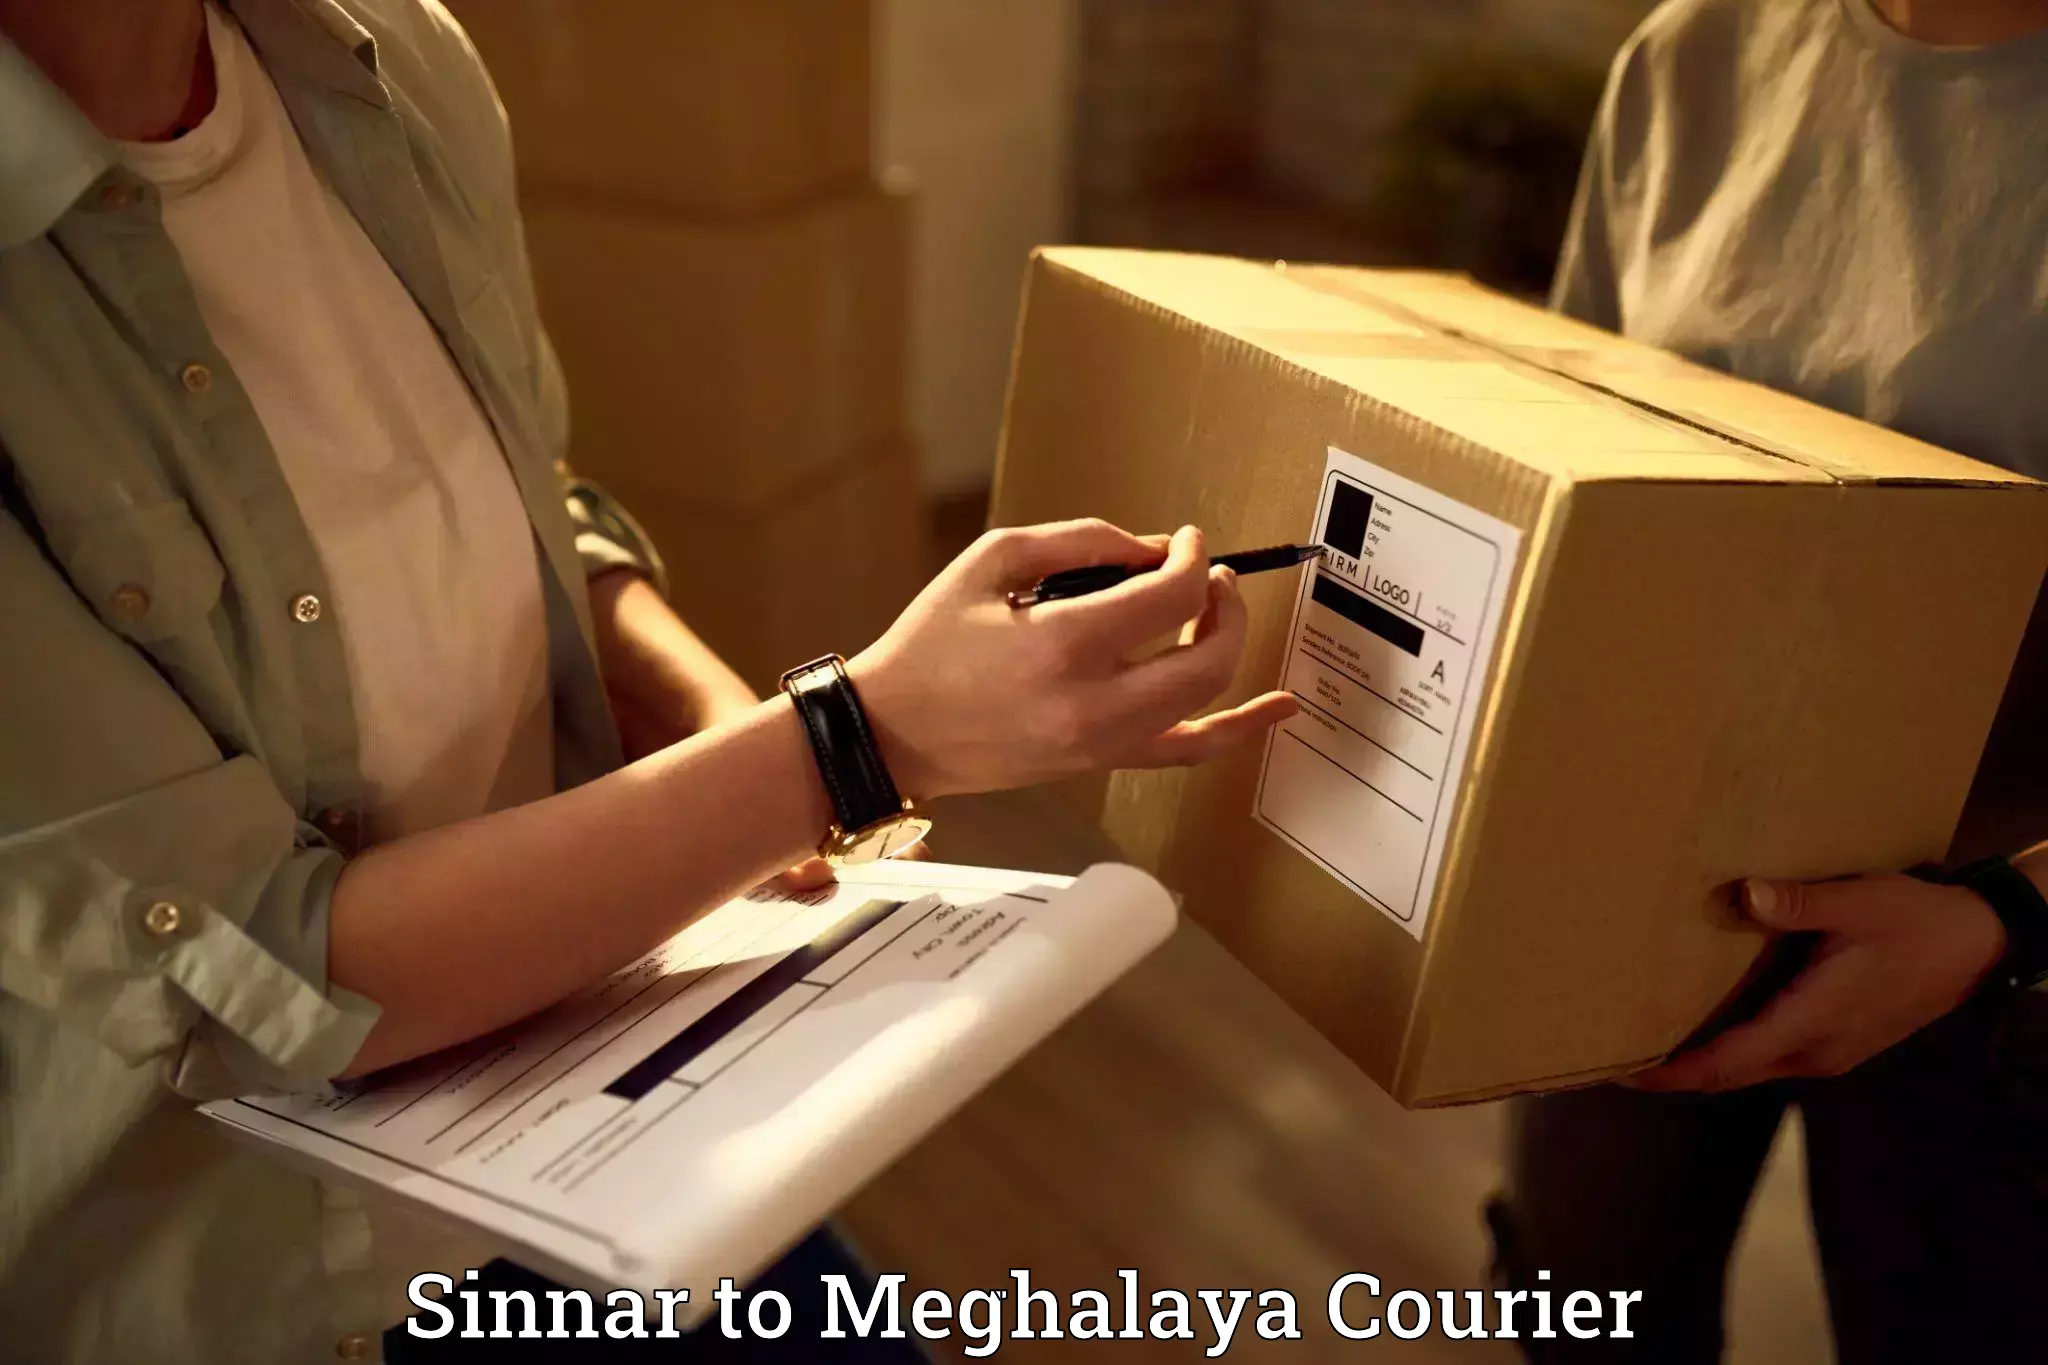 Furniture moving specialists Sinnar to Meghalaya